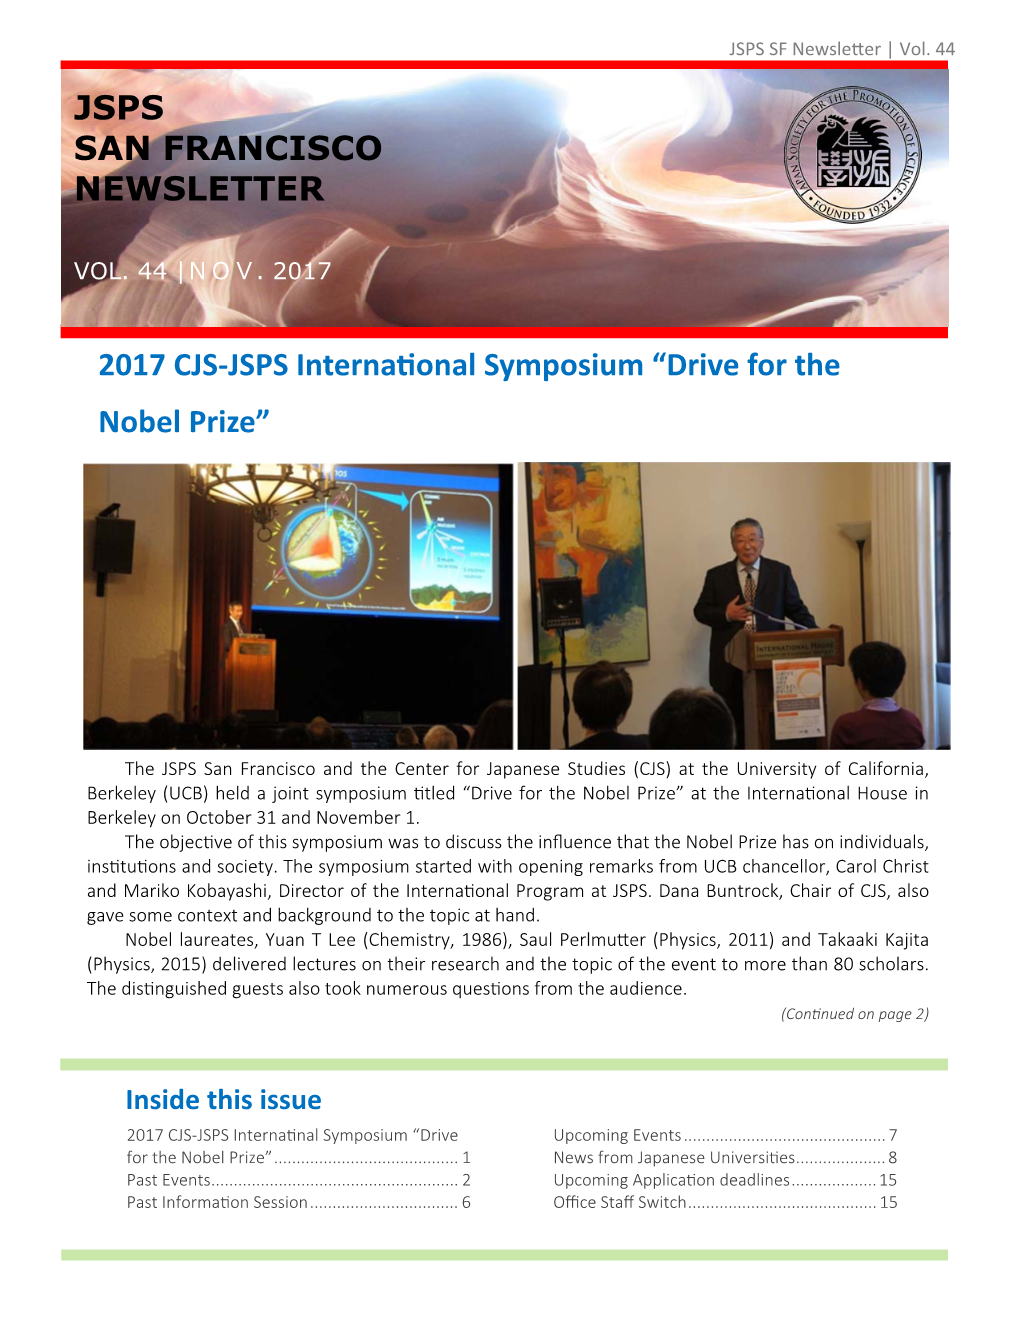 2017 CJS‐JSPS Internaonal Symposium “Drive for the Nobel